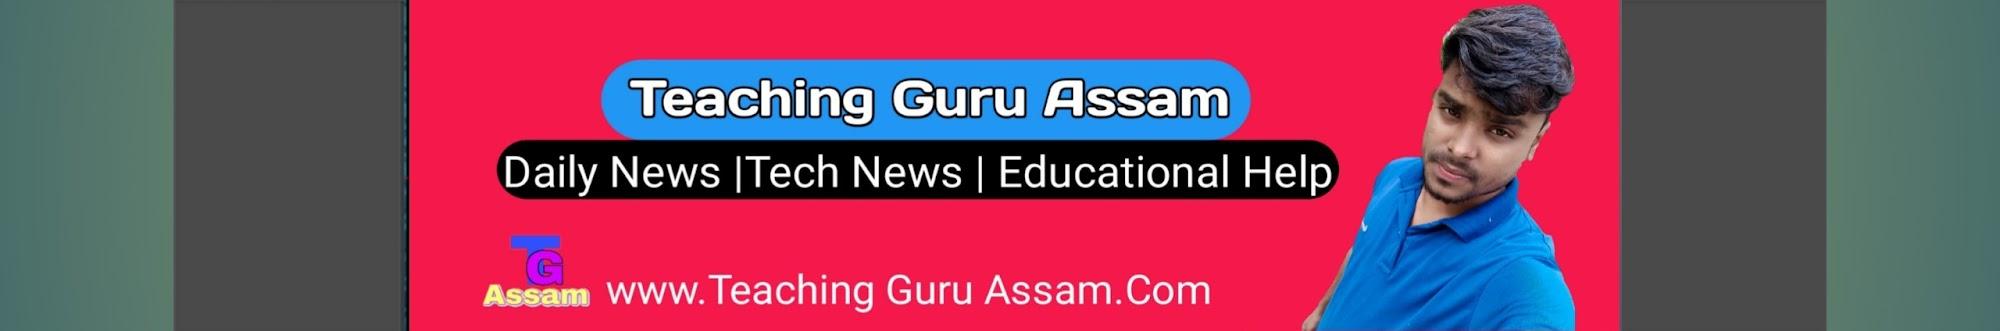 Teaching Guru Assam